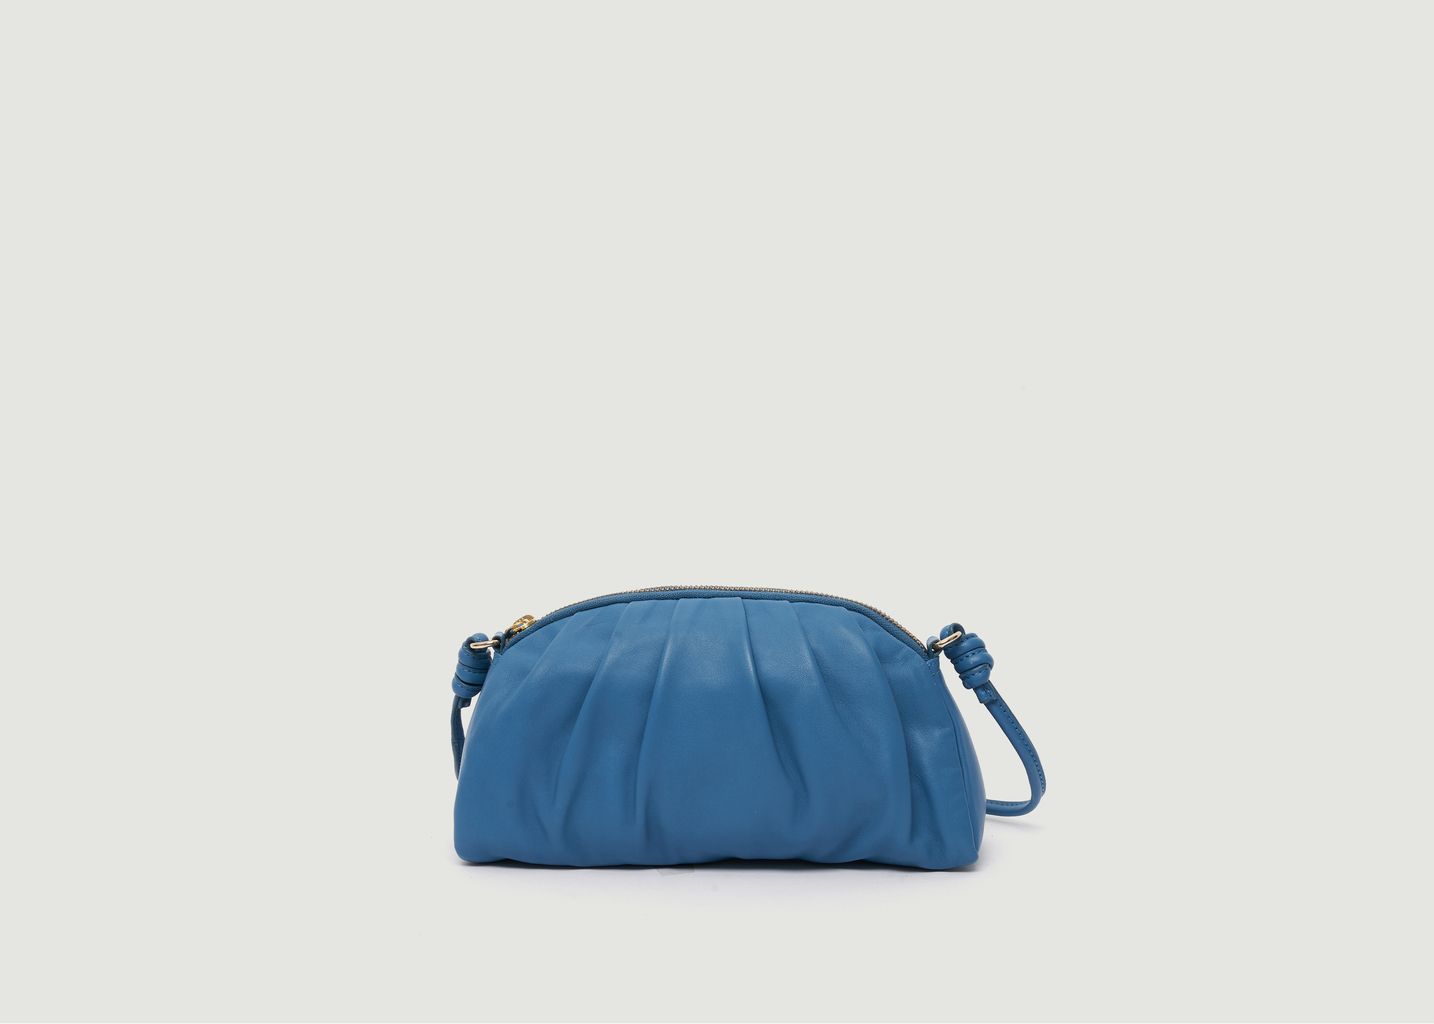 Roxy shoulder bag - Petite Mendigote